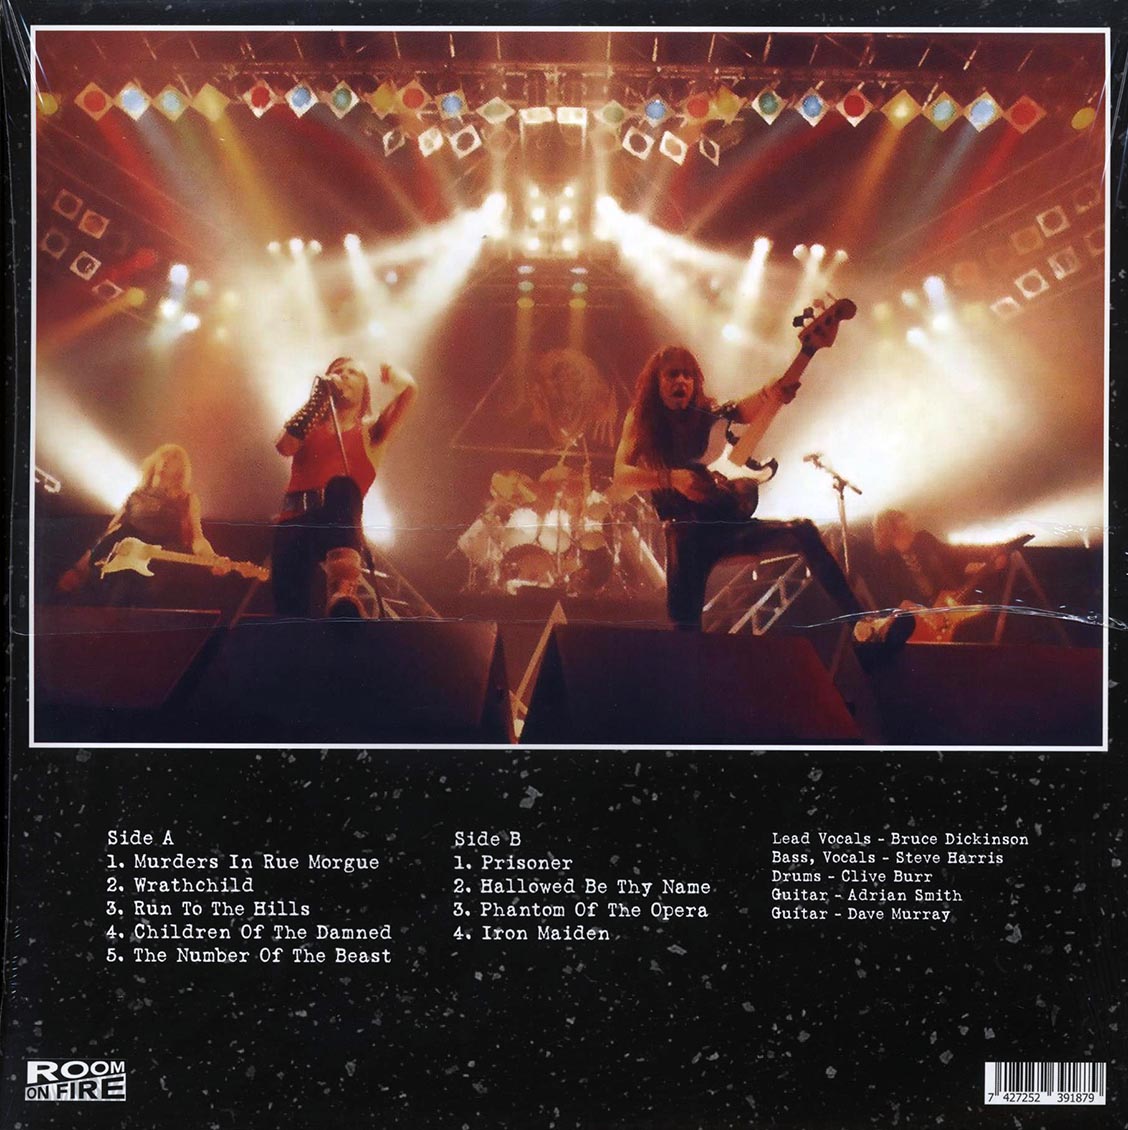 Iron Maiden - Live At The Palladium, New York, 29th June 1982 Radio Broadcast (ltd. 500 copies made) (blue vinyl) - Vinyl LP, LP